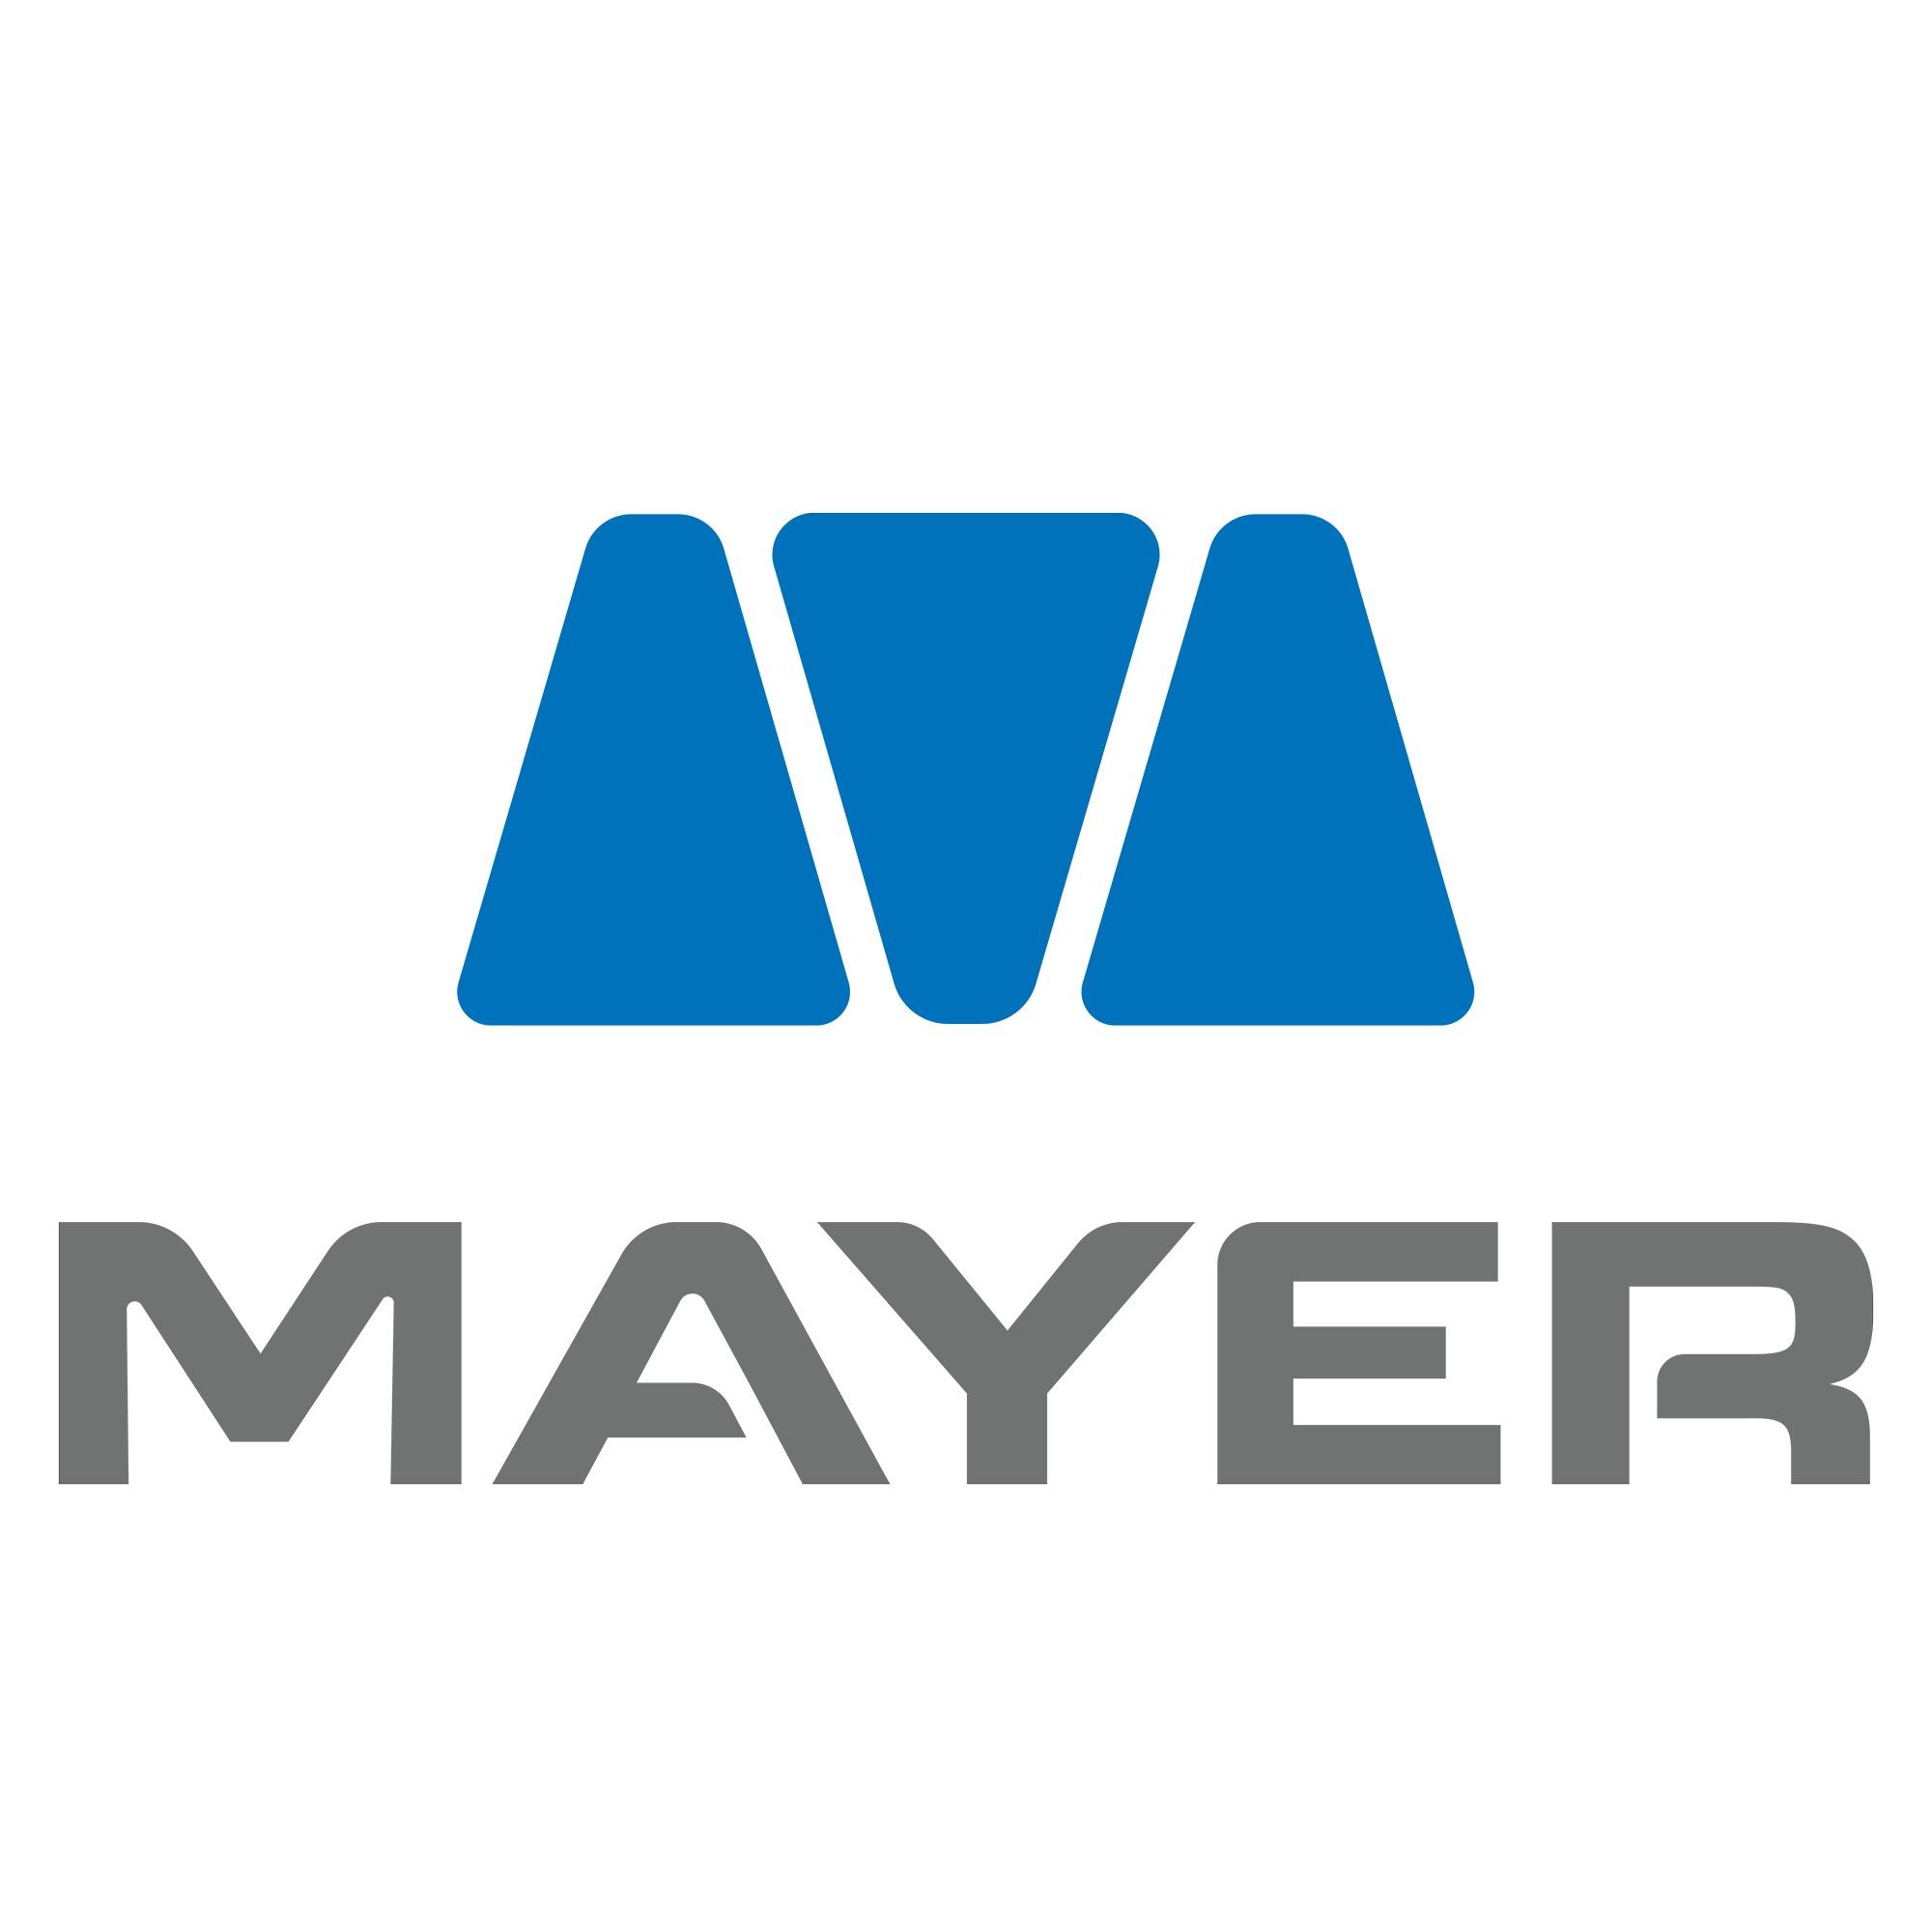 Mayer Electric Supply - Montgomery, AL 36104 - (334)834-5930 | ShowMeLocal.com